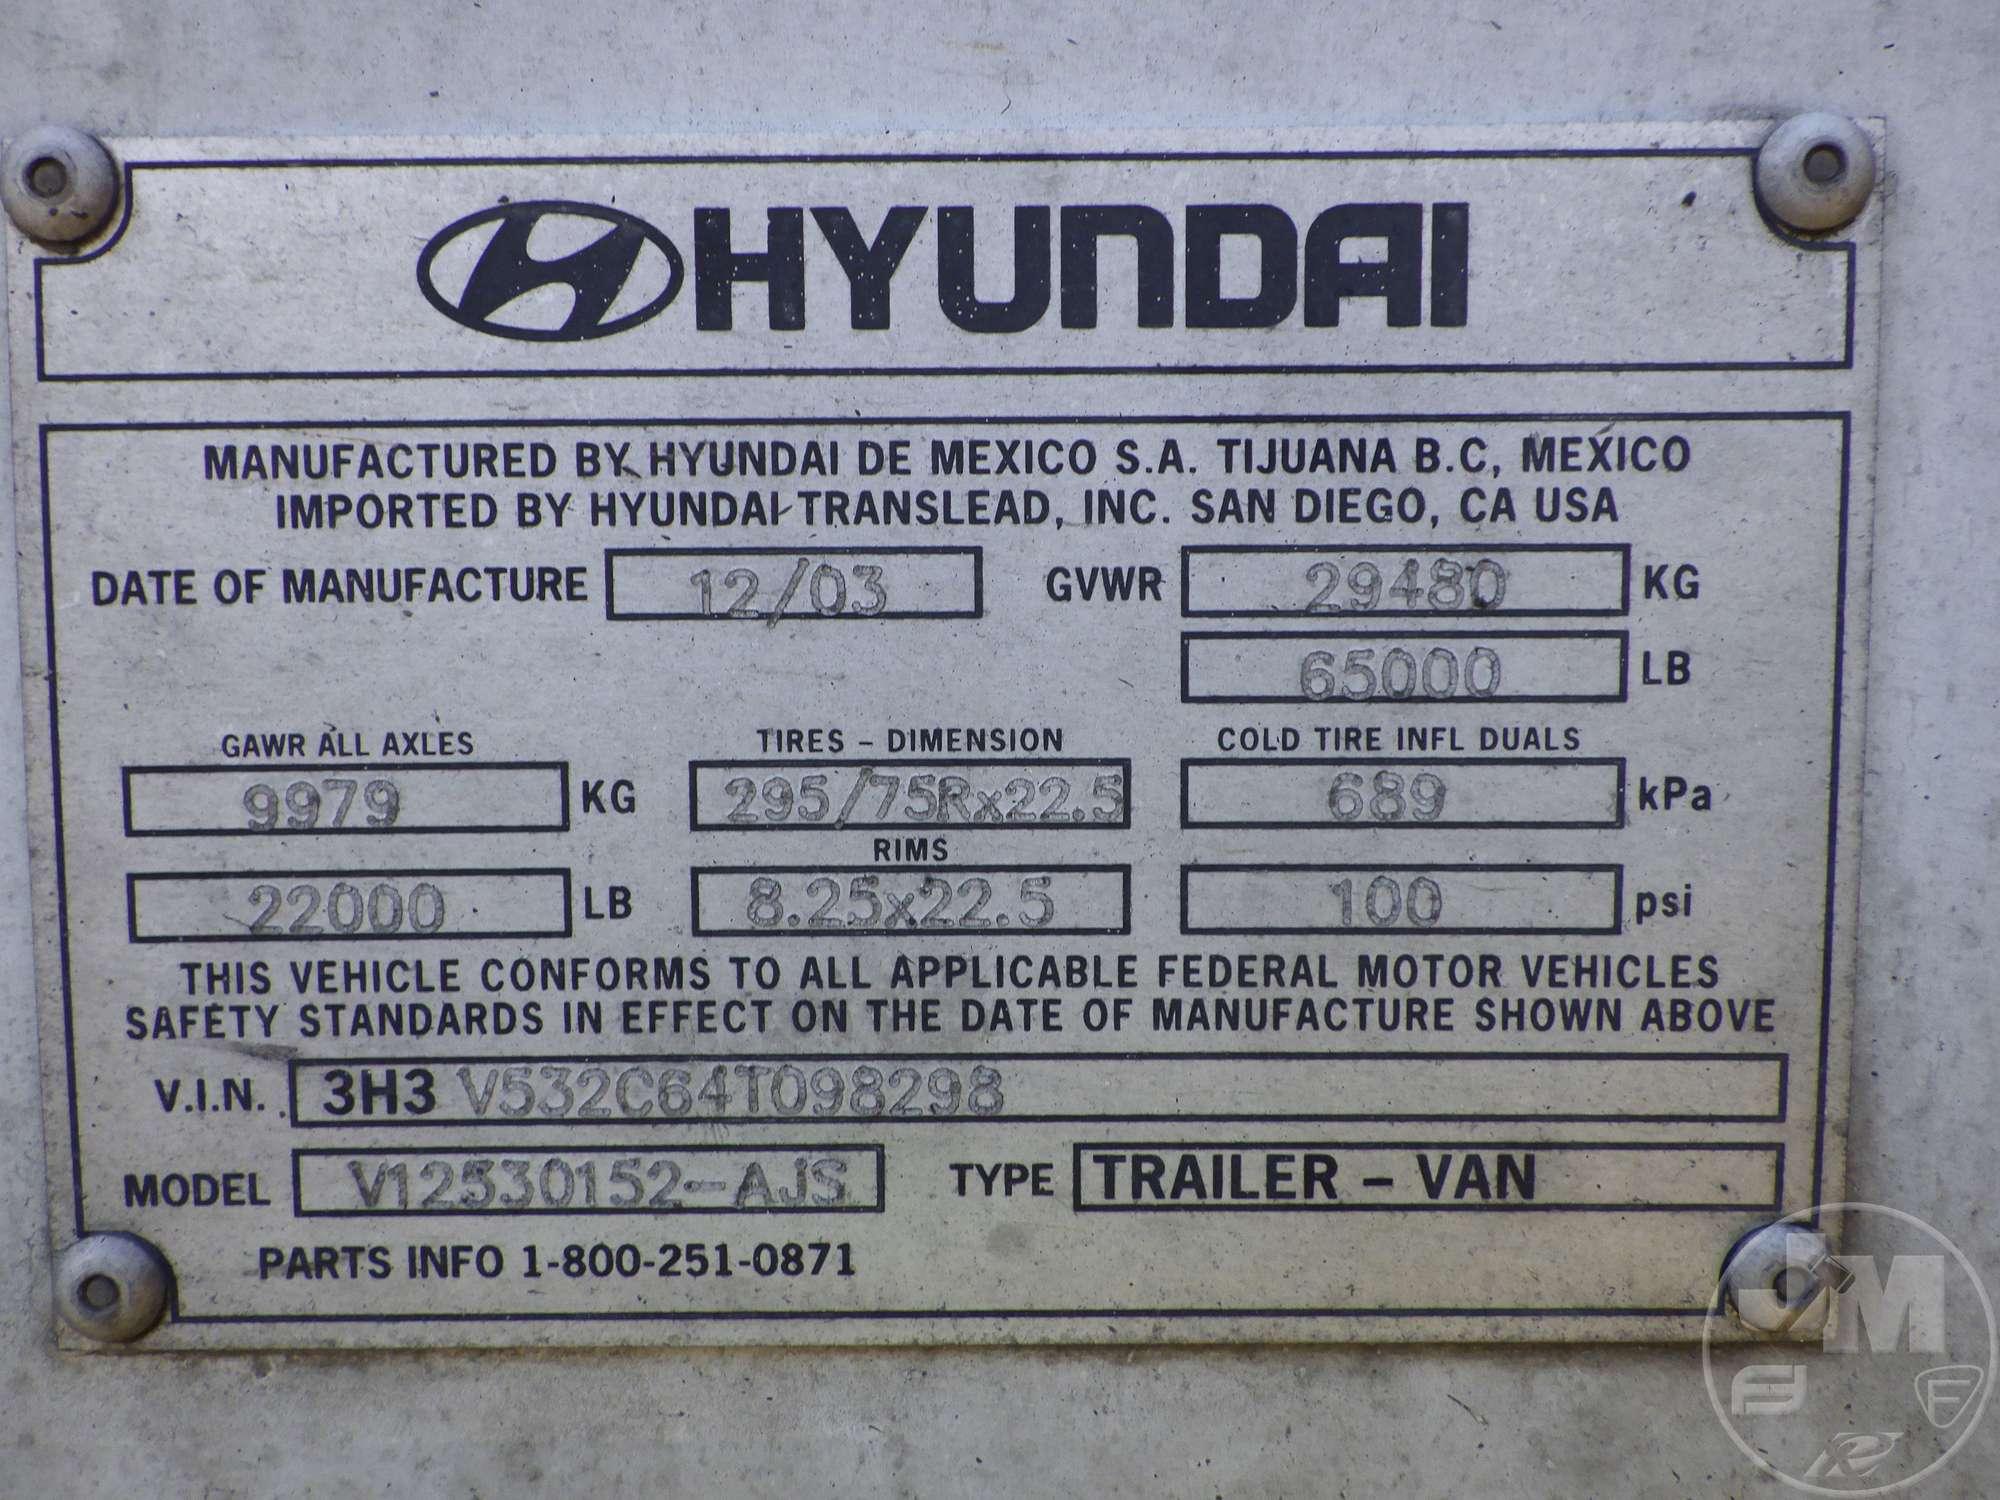 2004 HYUNDAI TRANSLEAD TRAILERS V12530152-AJS 53'X102" VAN TRAILER VIN: 3H3V532C64T098298